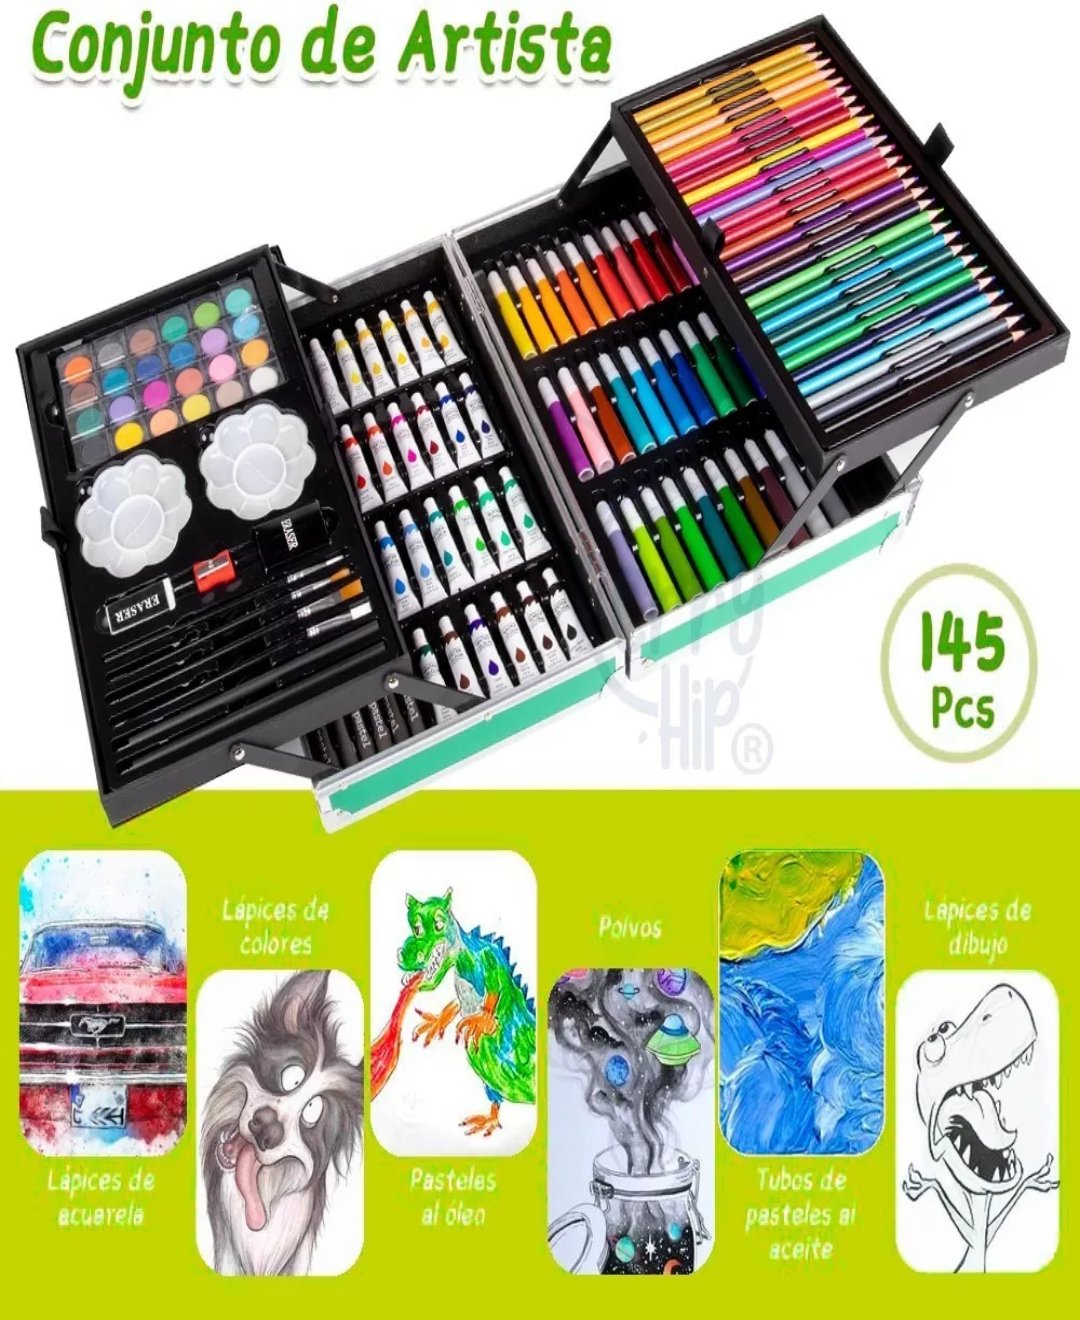 Set De Arte Profesional, Kit De Dibujo Colores Plegable